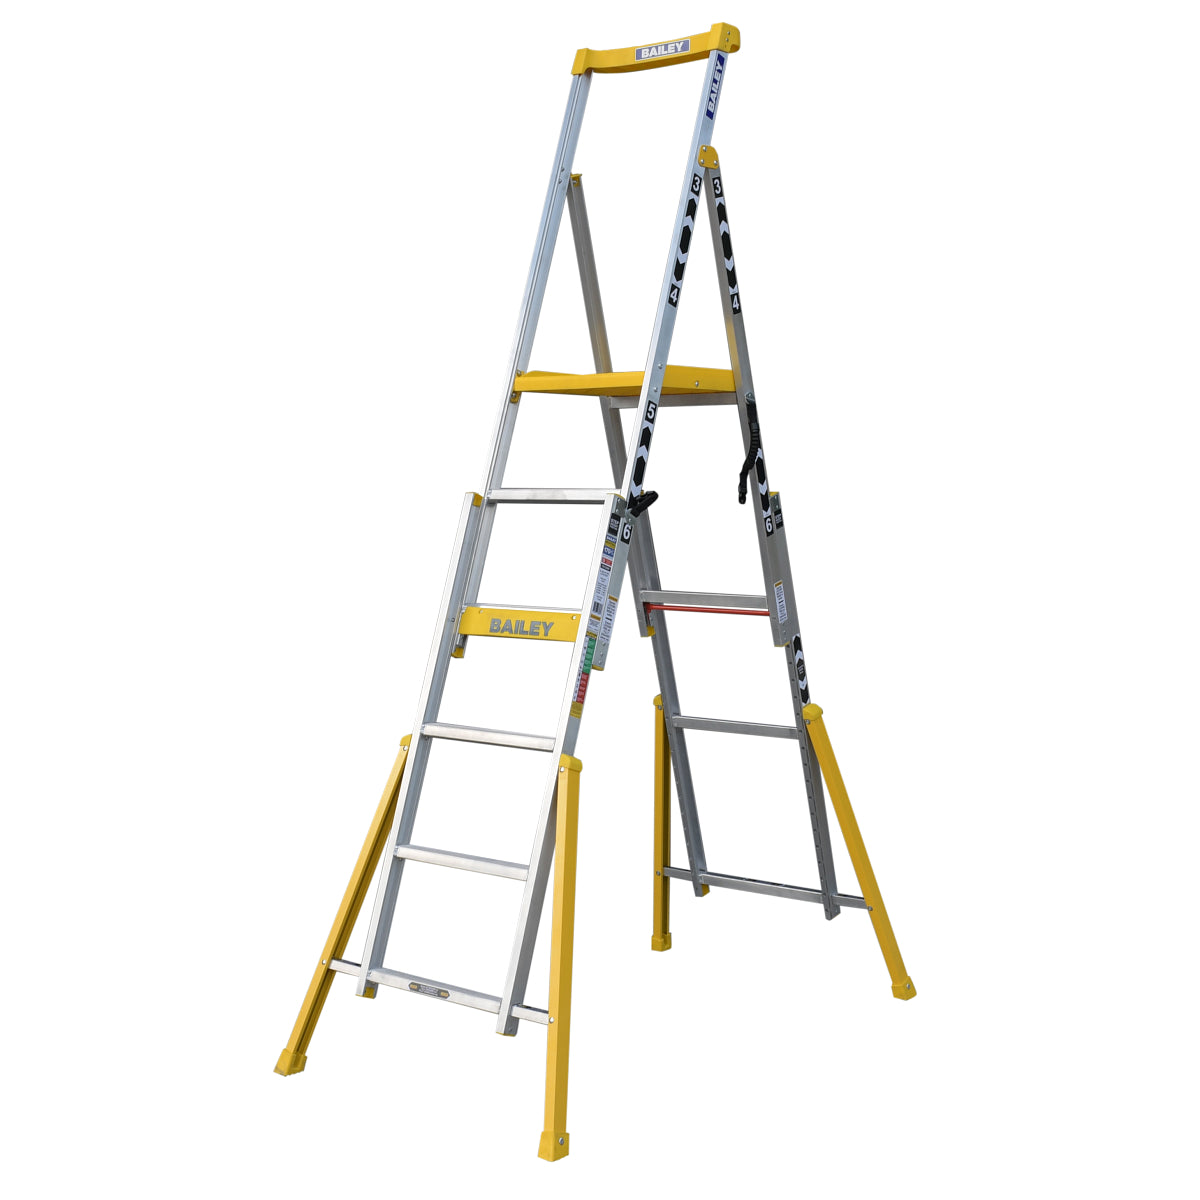 Adjustable Height Ladders | Platforms & Ladders | Platforms and Ladders